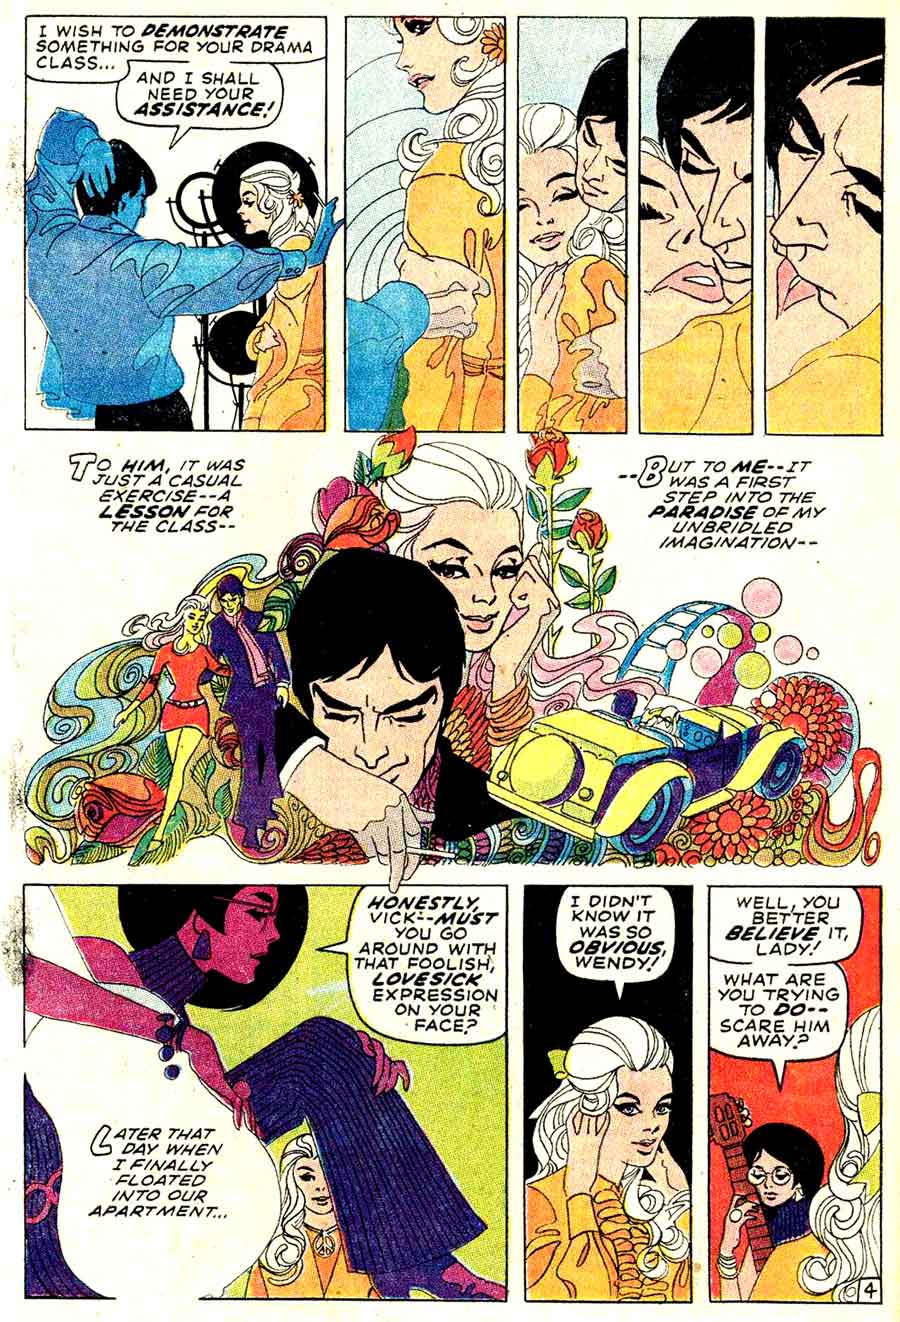 Our Love Story v1 #5 - Jim Steranko marvel bronze age romance comic book page art